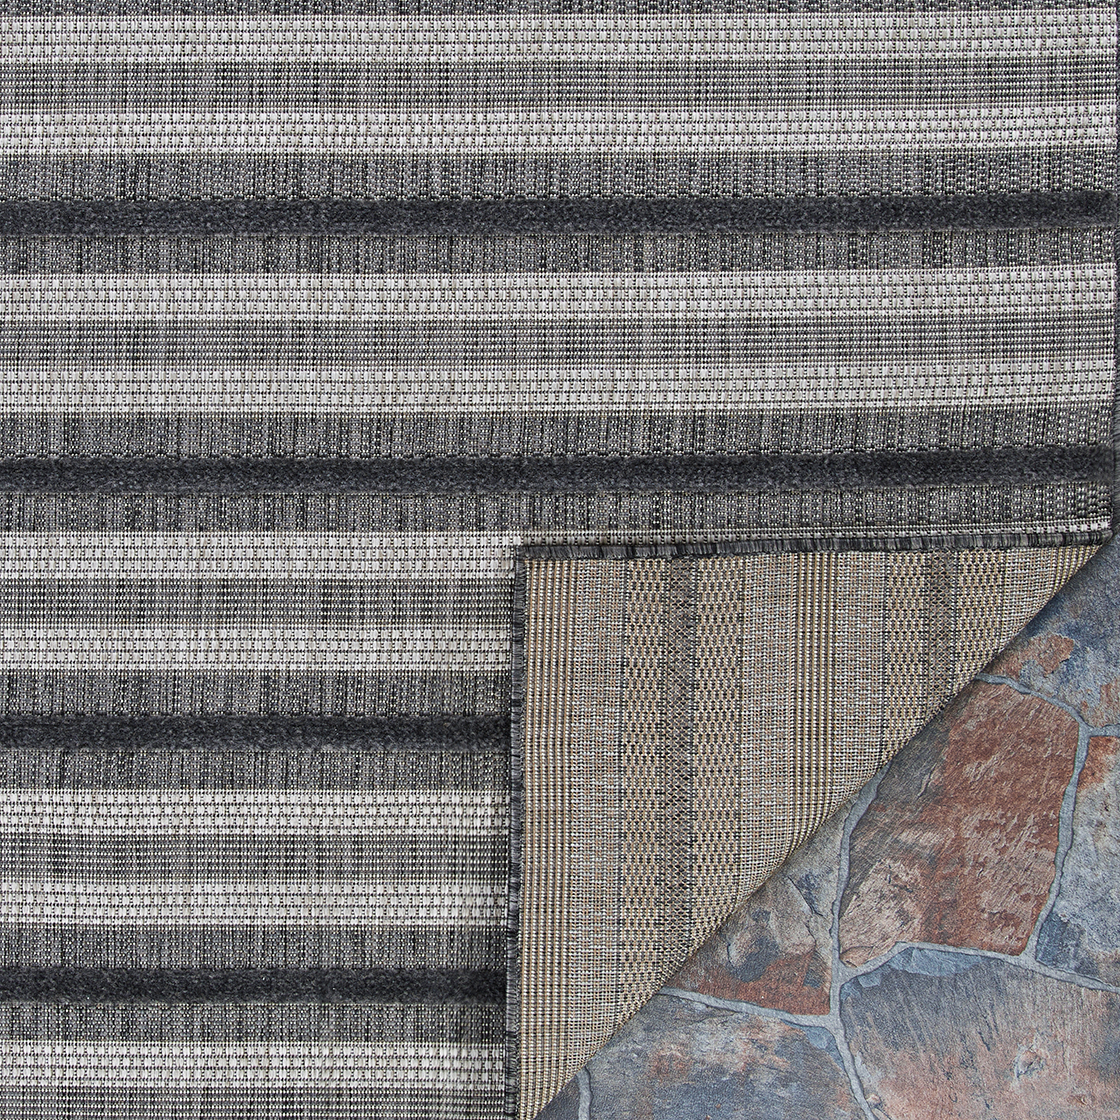 Couristan Veranda Havasu Stripe Grey-Coal Indoor/Outdoor Area Rug, 3'11" x 5'6" - image 2 of 13